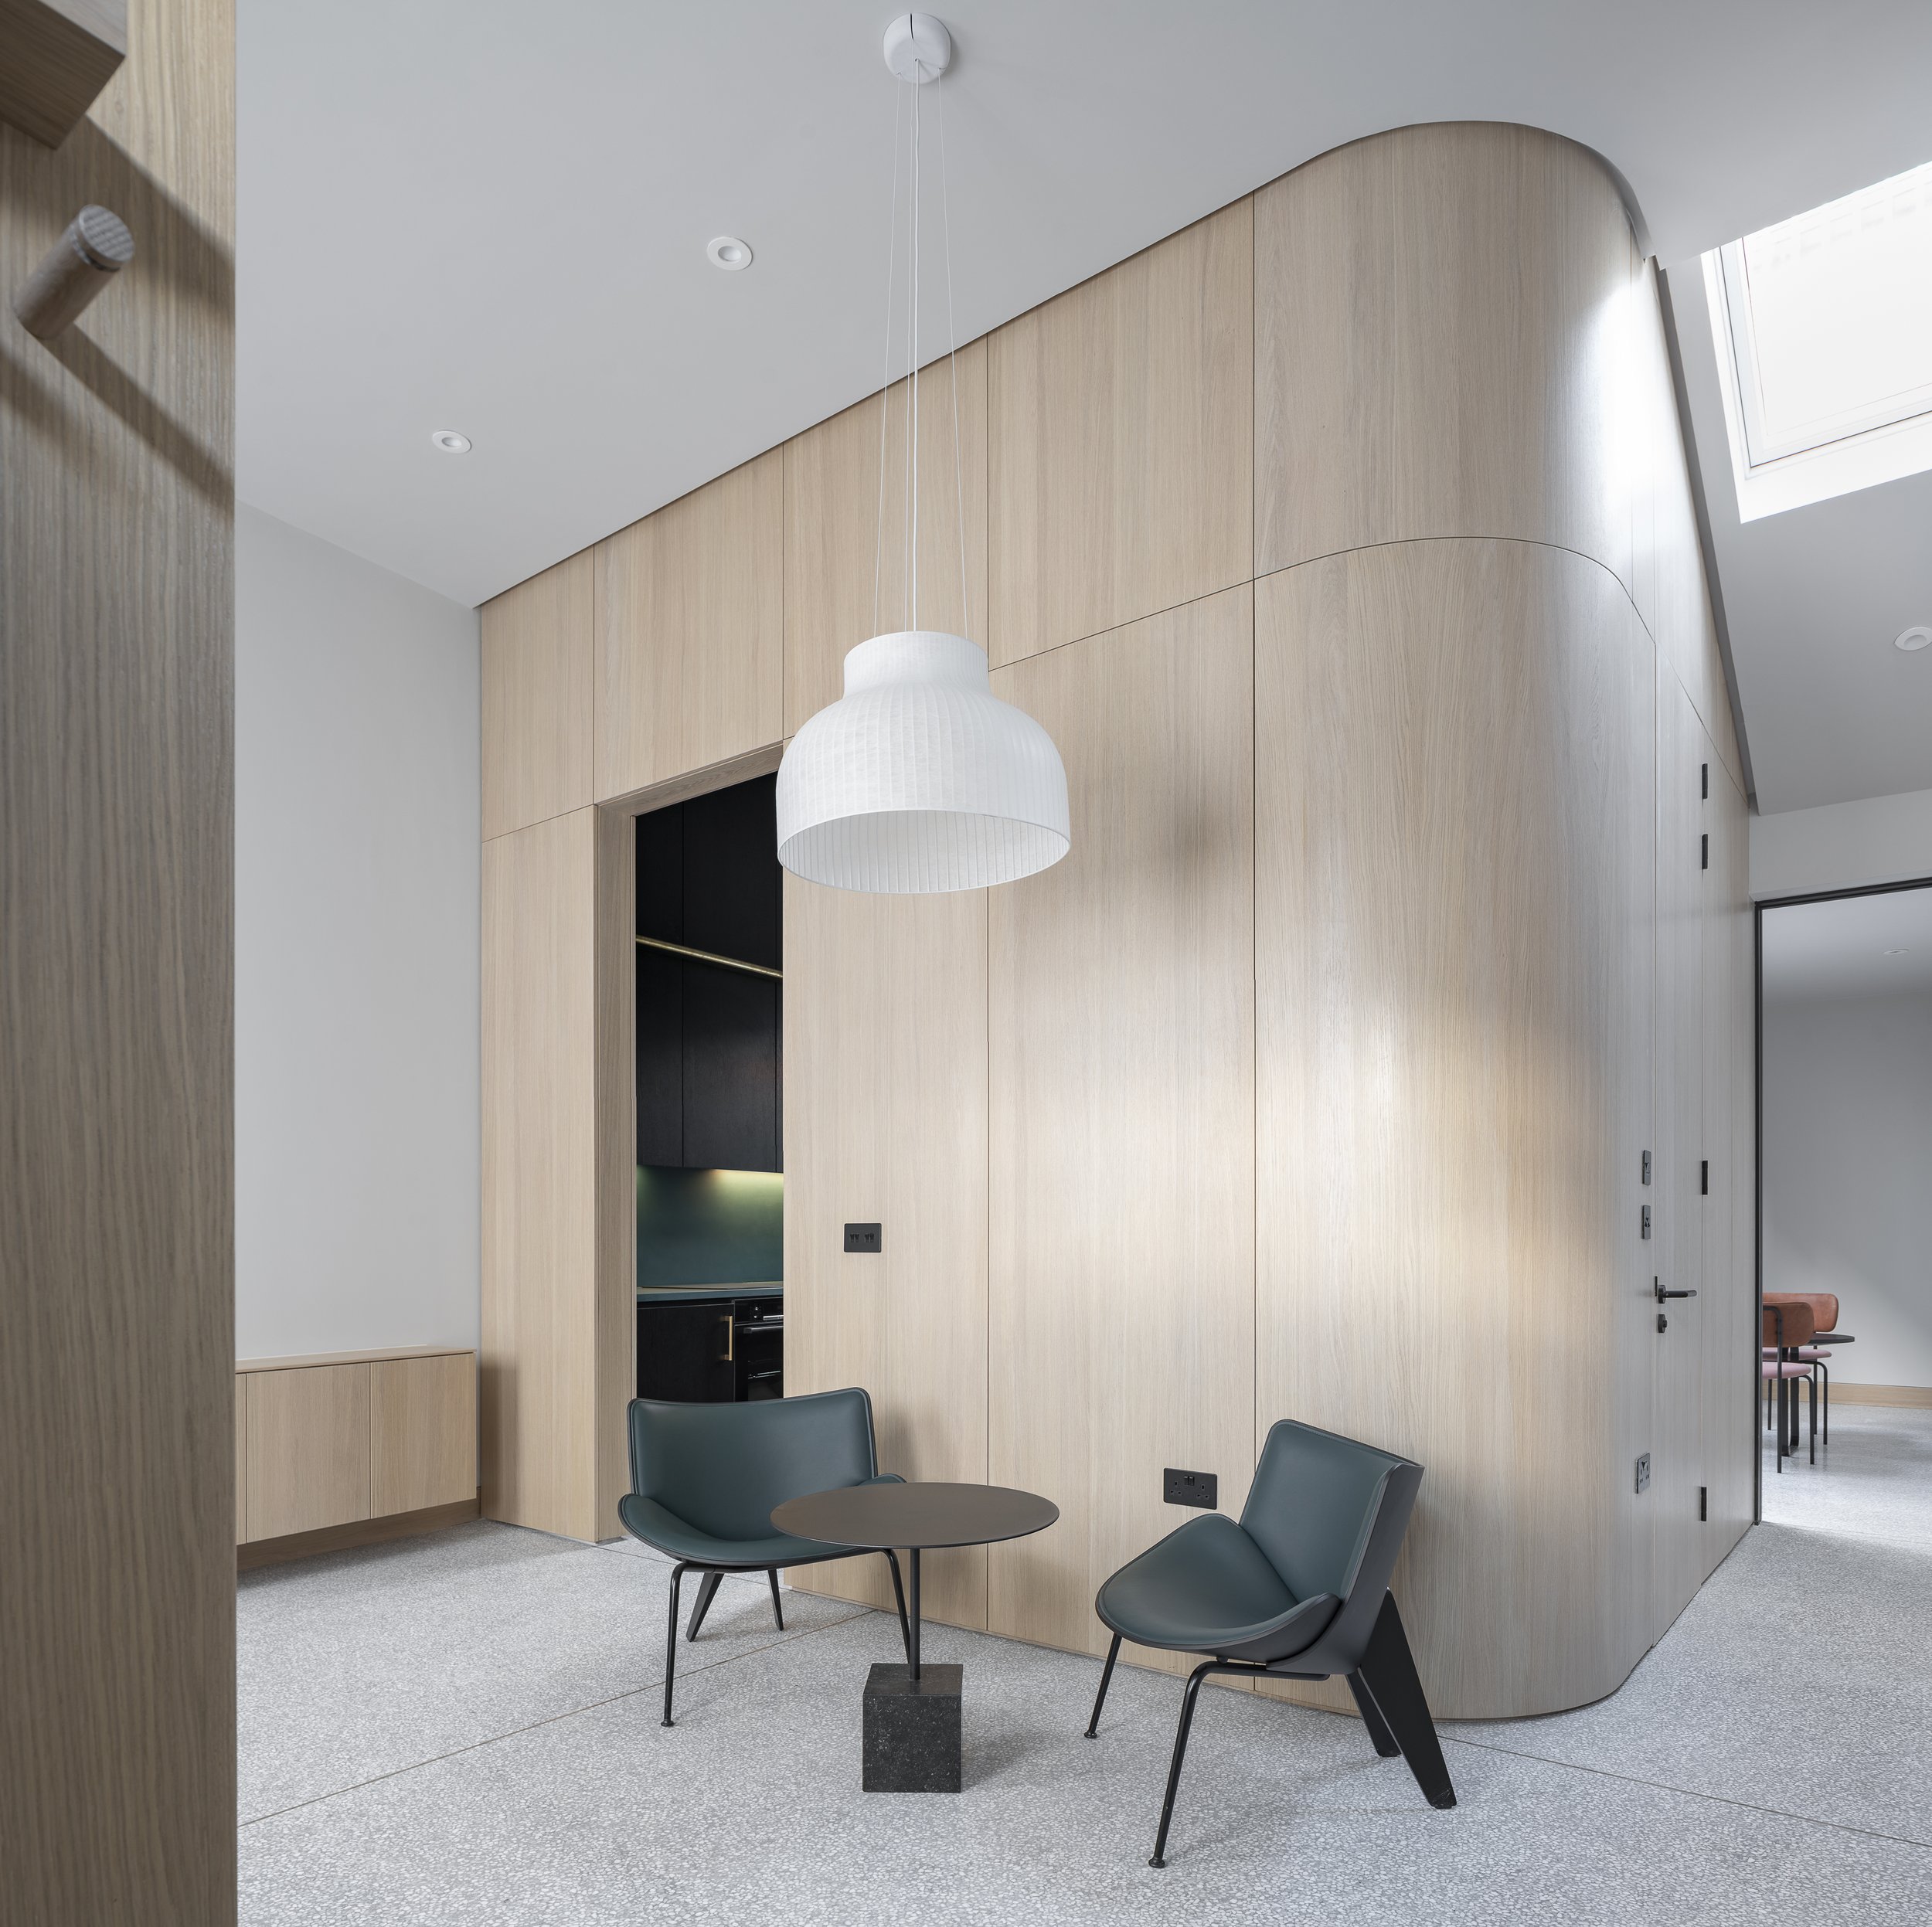 Award nominated House Refurbishment project in Dublin designed by Saul Design